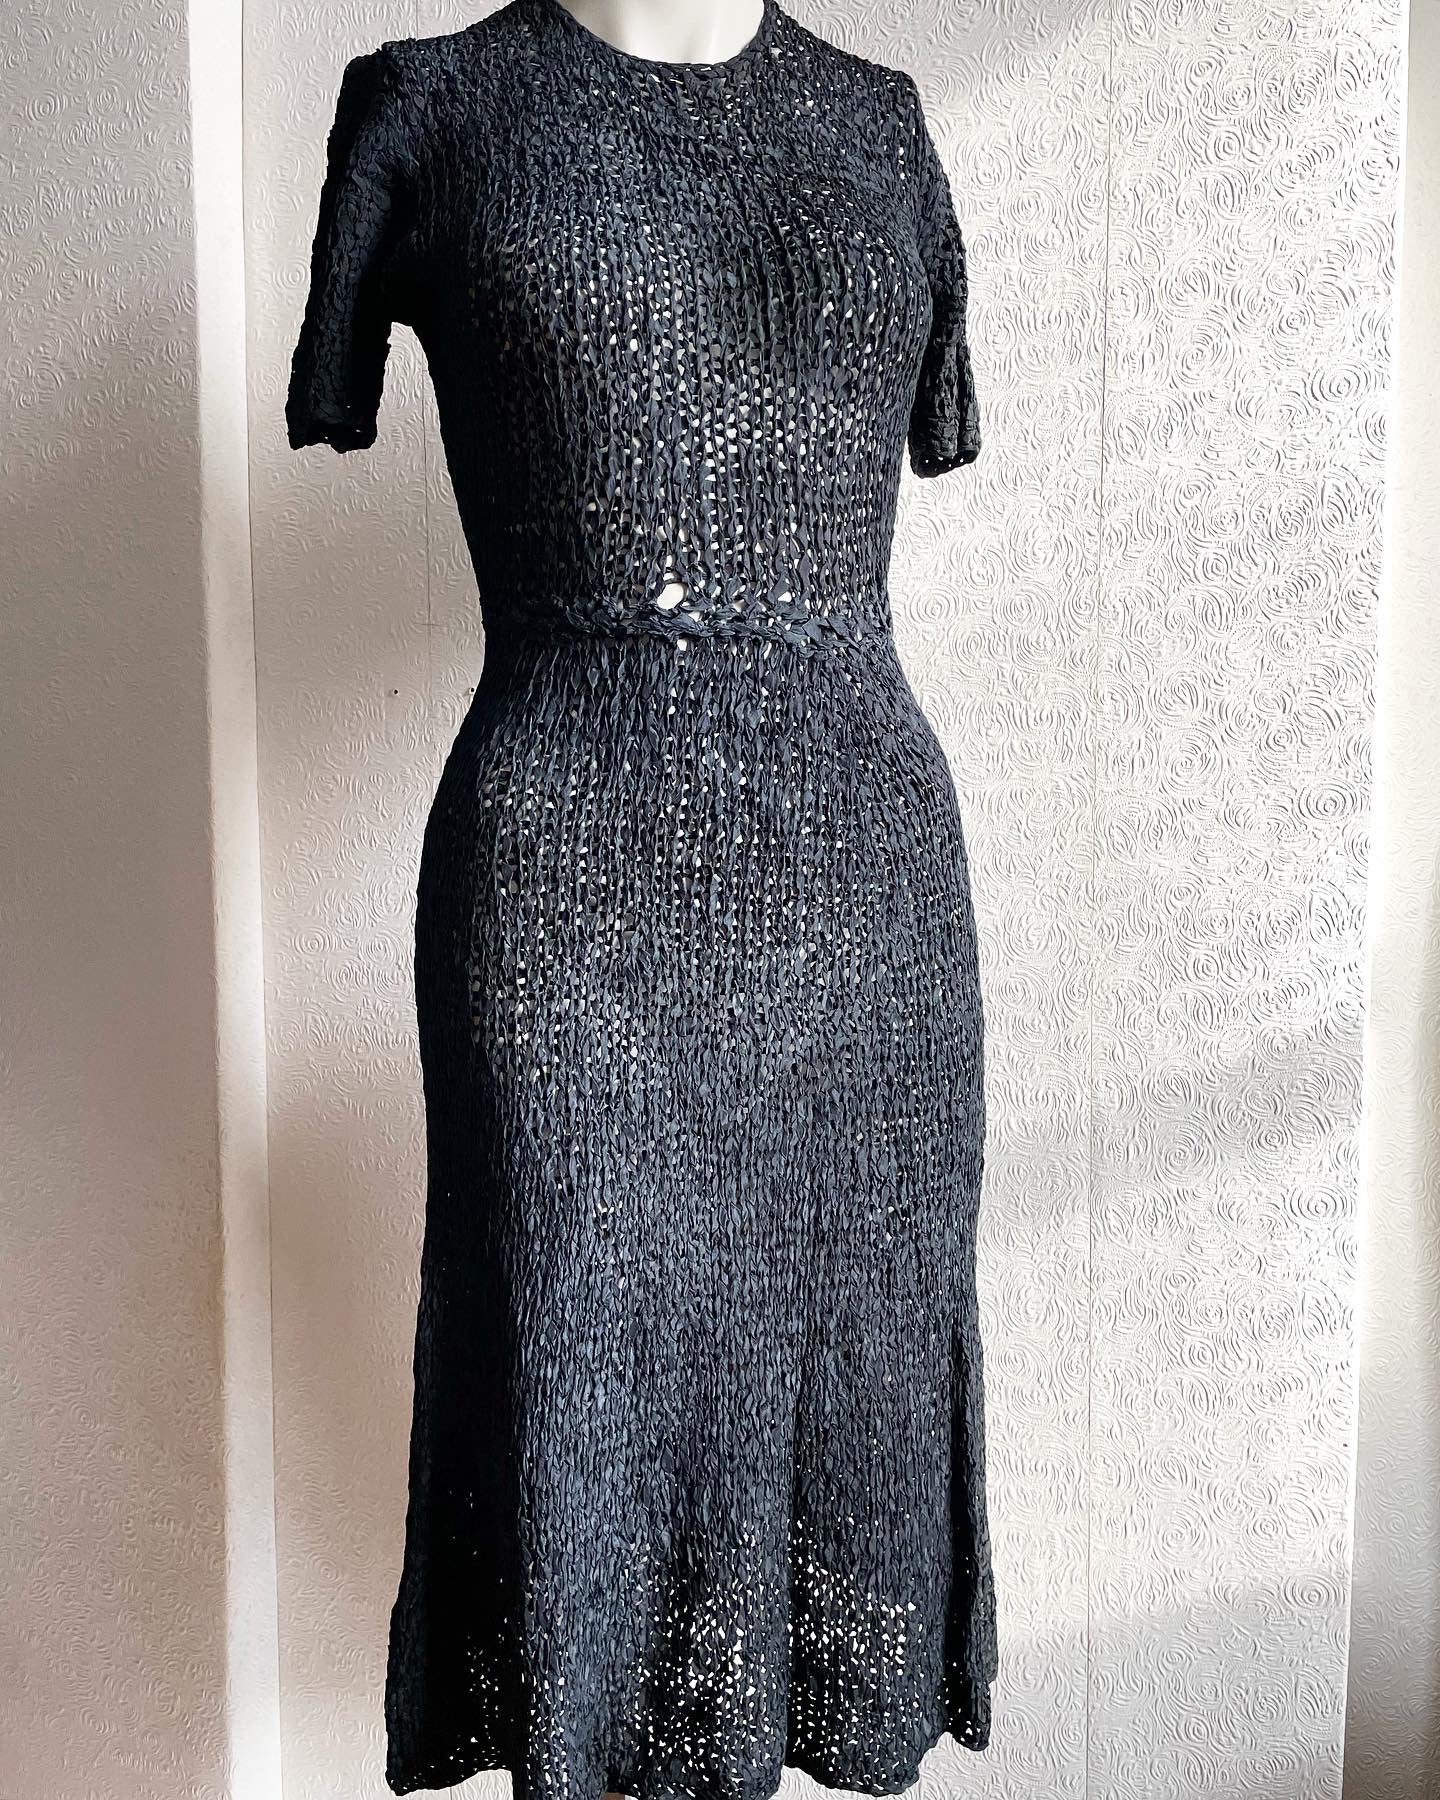 Vintage 1940's Black Ribbon Crochet Dress. S